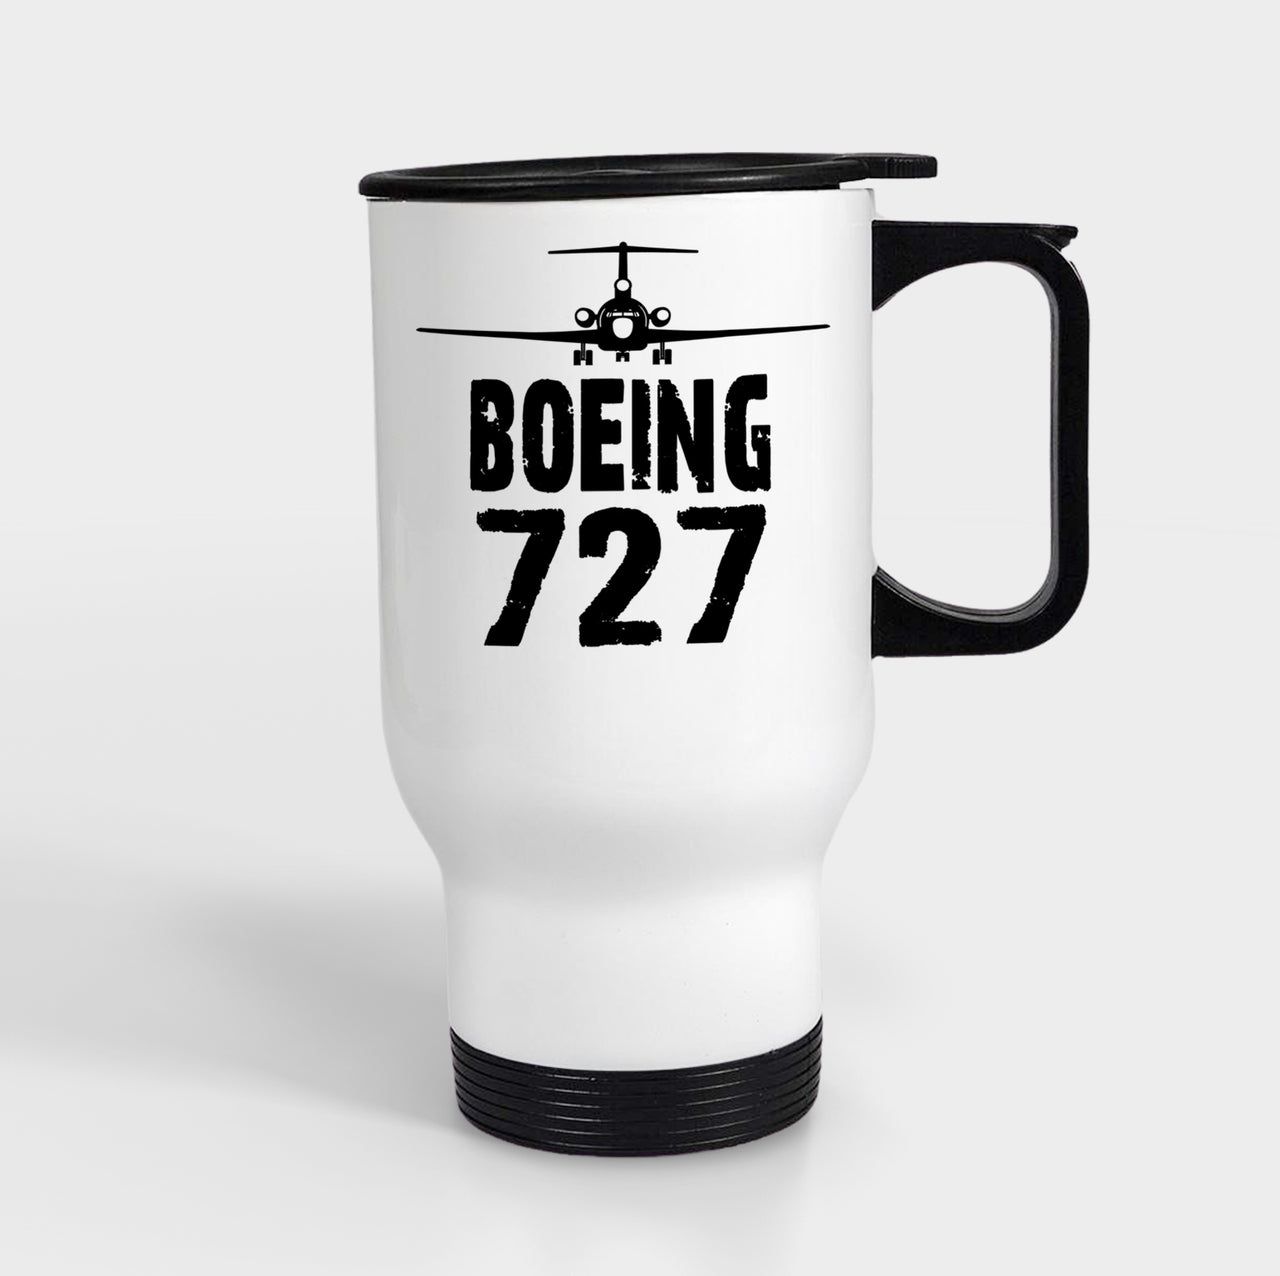 Boeing 727 & Plane Designed Travel Mugs (With Holder)